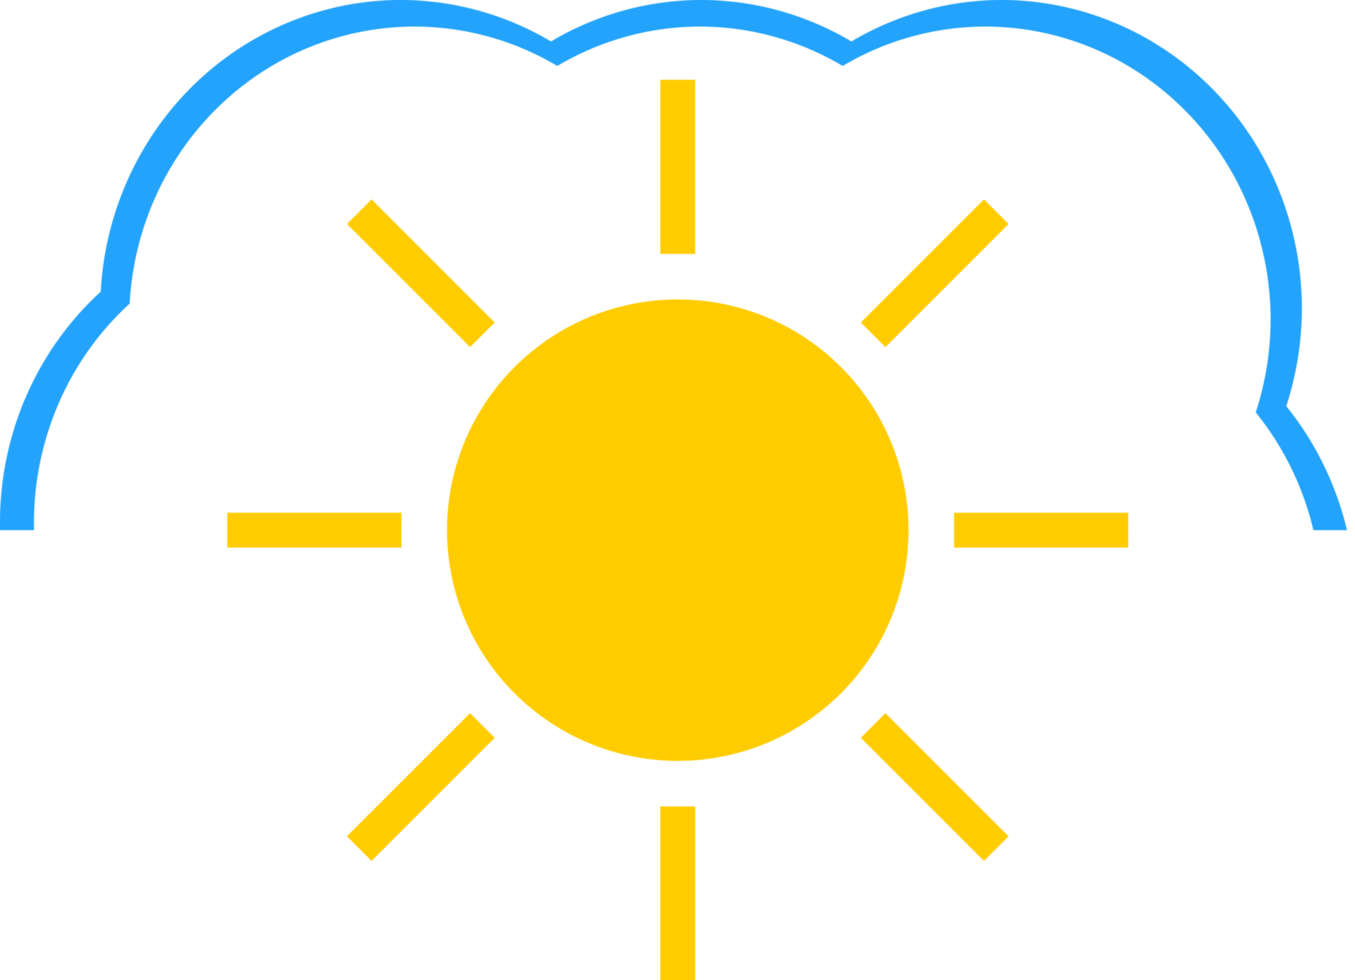 ikonen moln med solen png